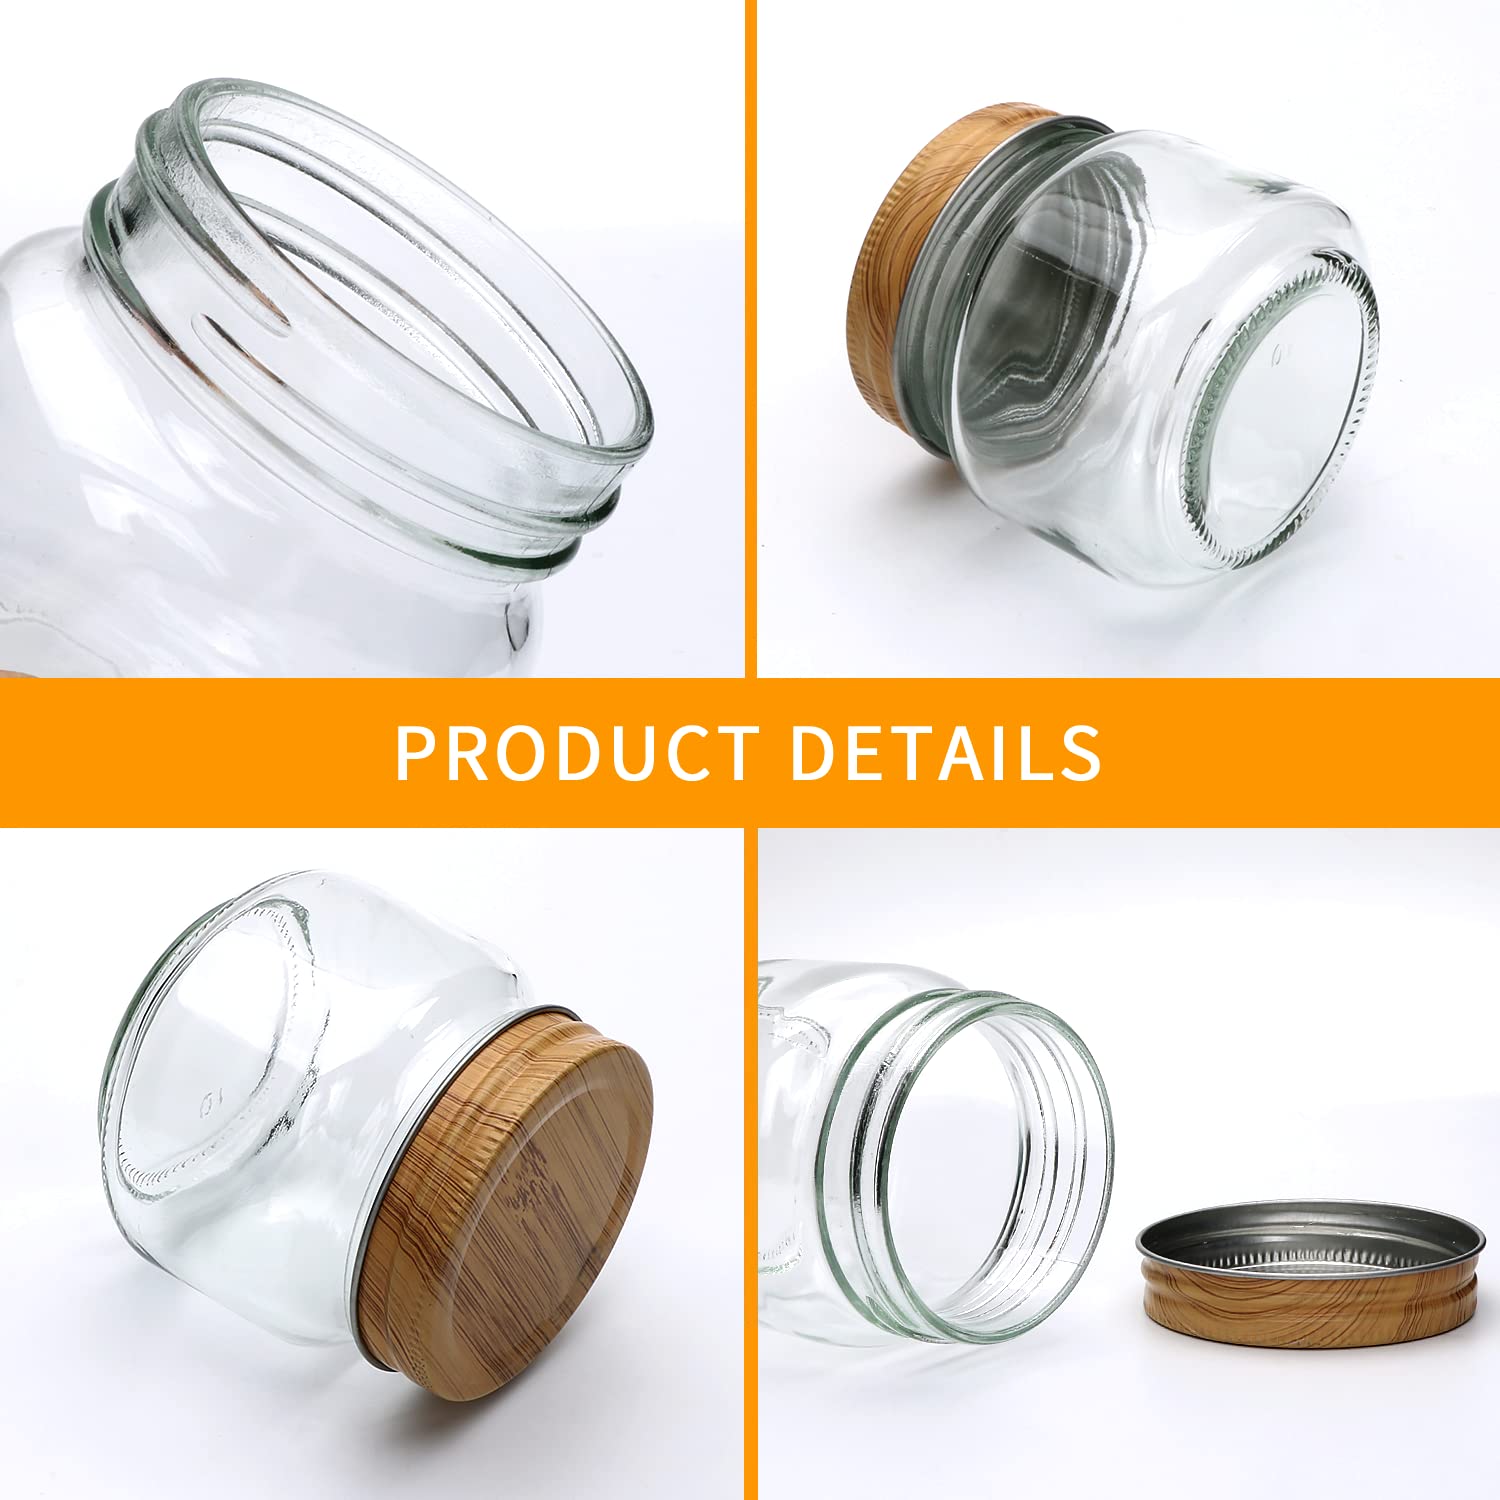 Accguan Mason Jars, glass jar 8OZ With Regular Lids(Wood Grain Iron Lid), Ideal for Jam, Honey, Wedding Favors, Shower Favors, 30 PACK